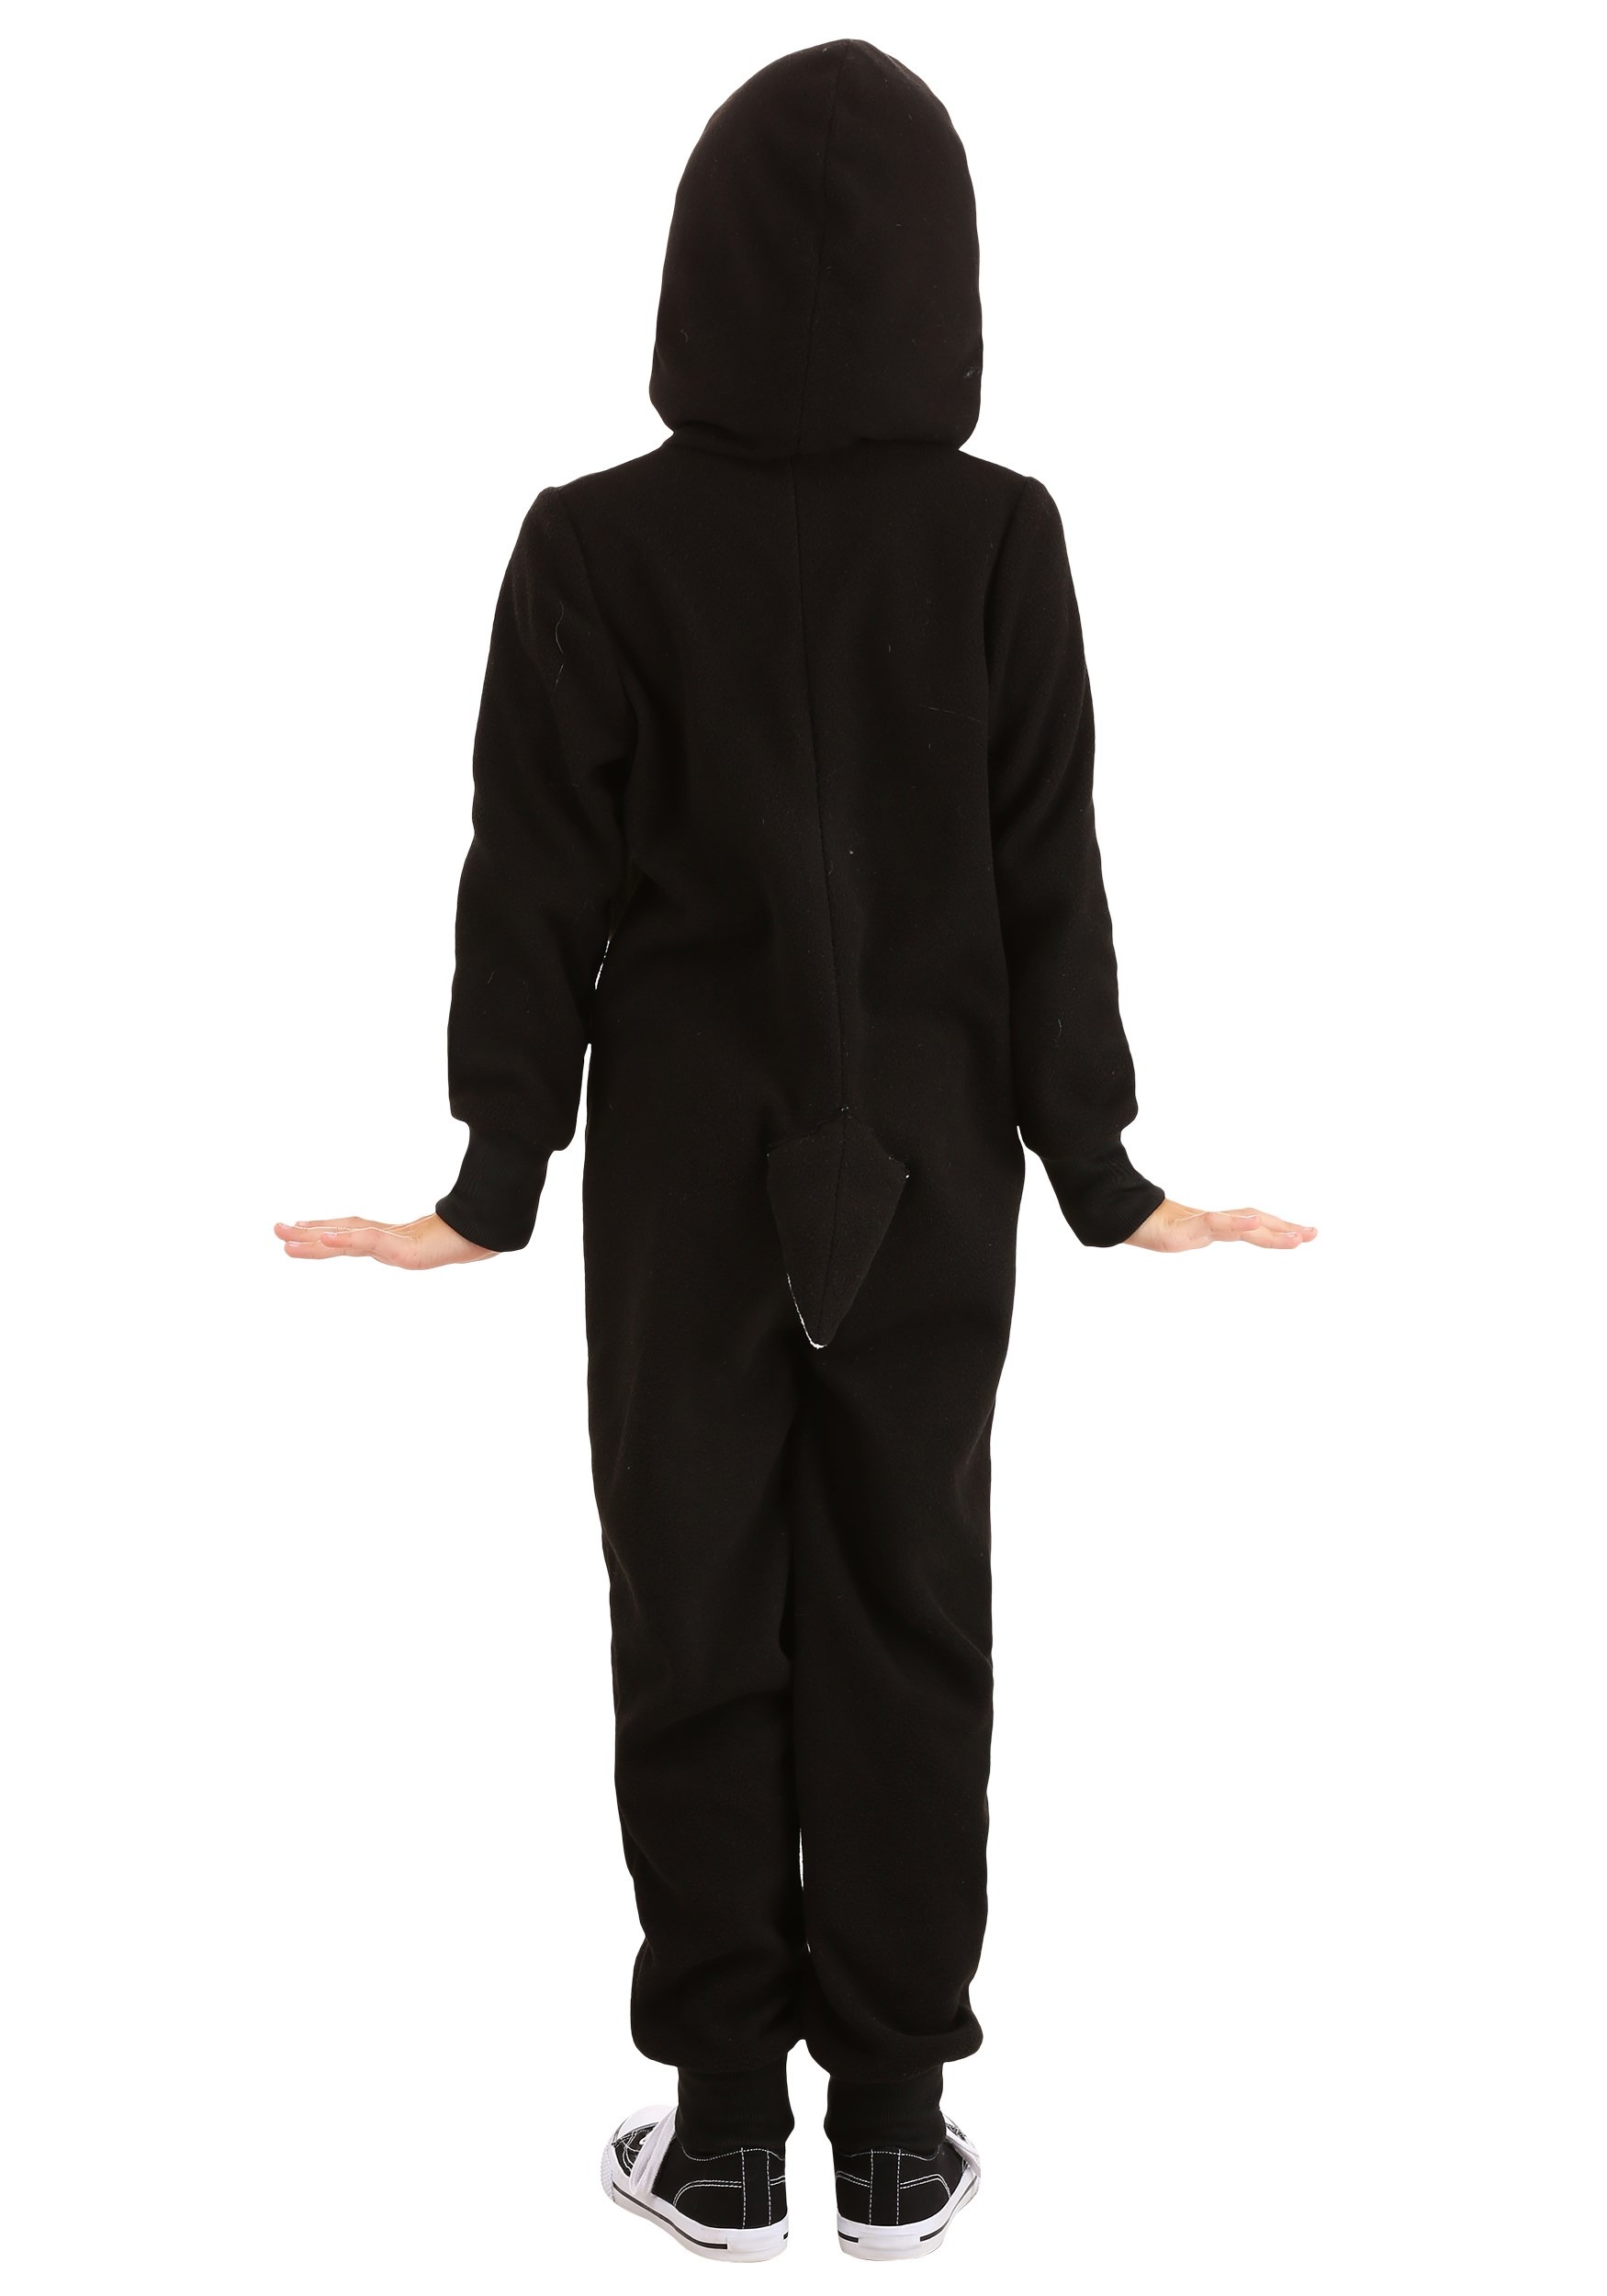 Pajama Penguin Costume for Kids